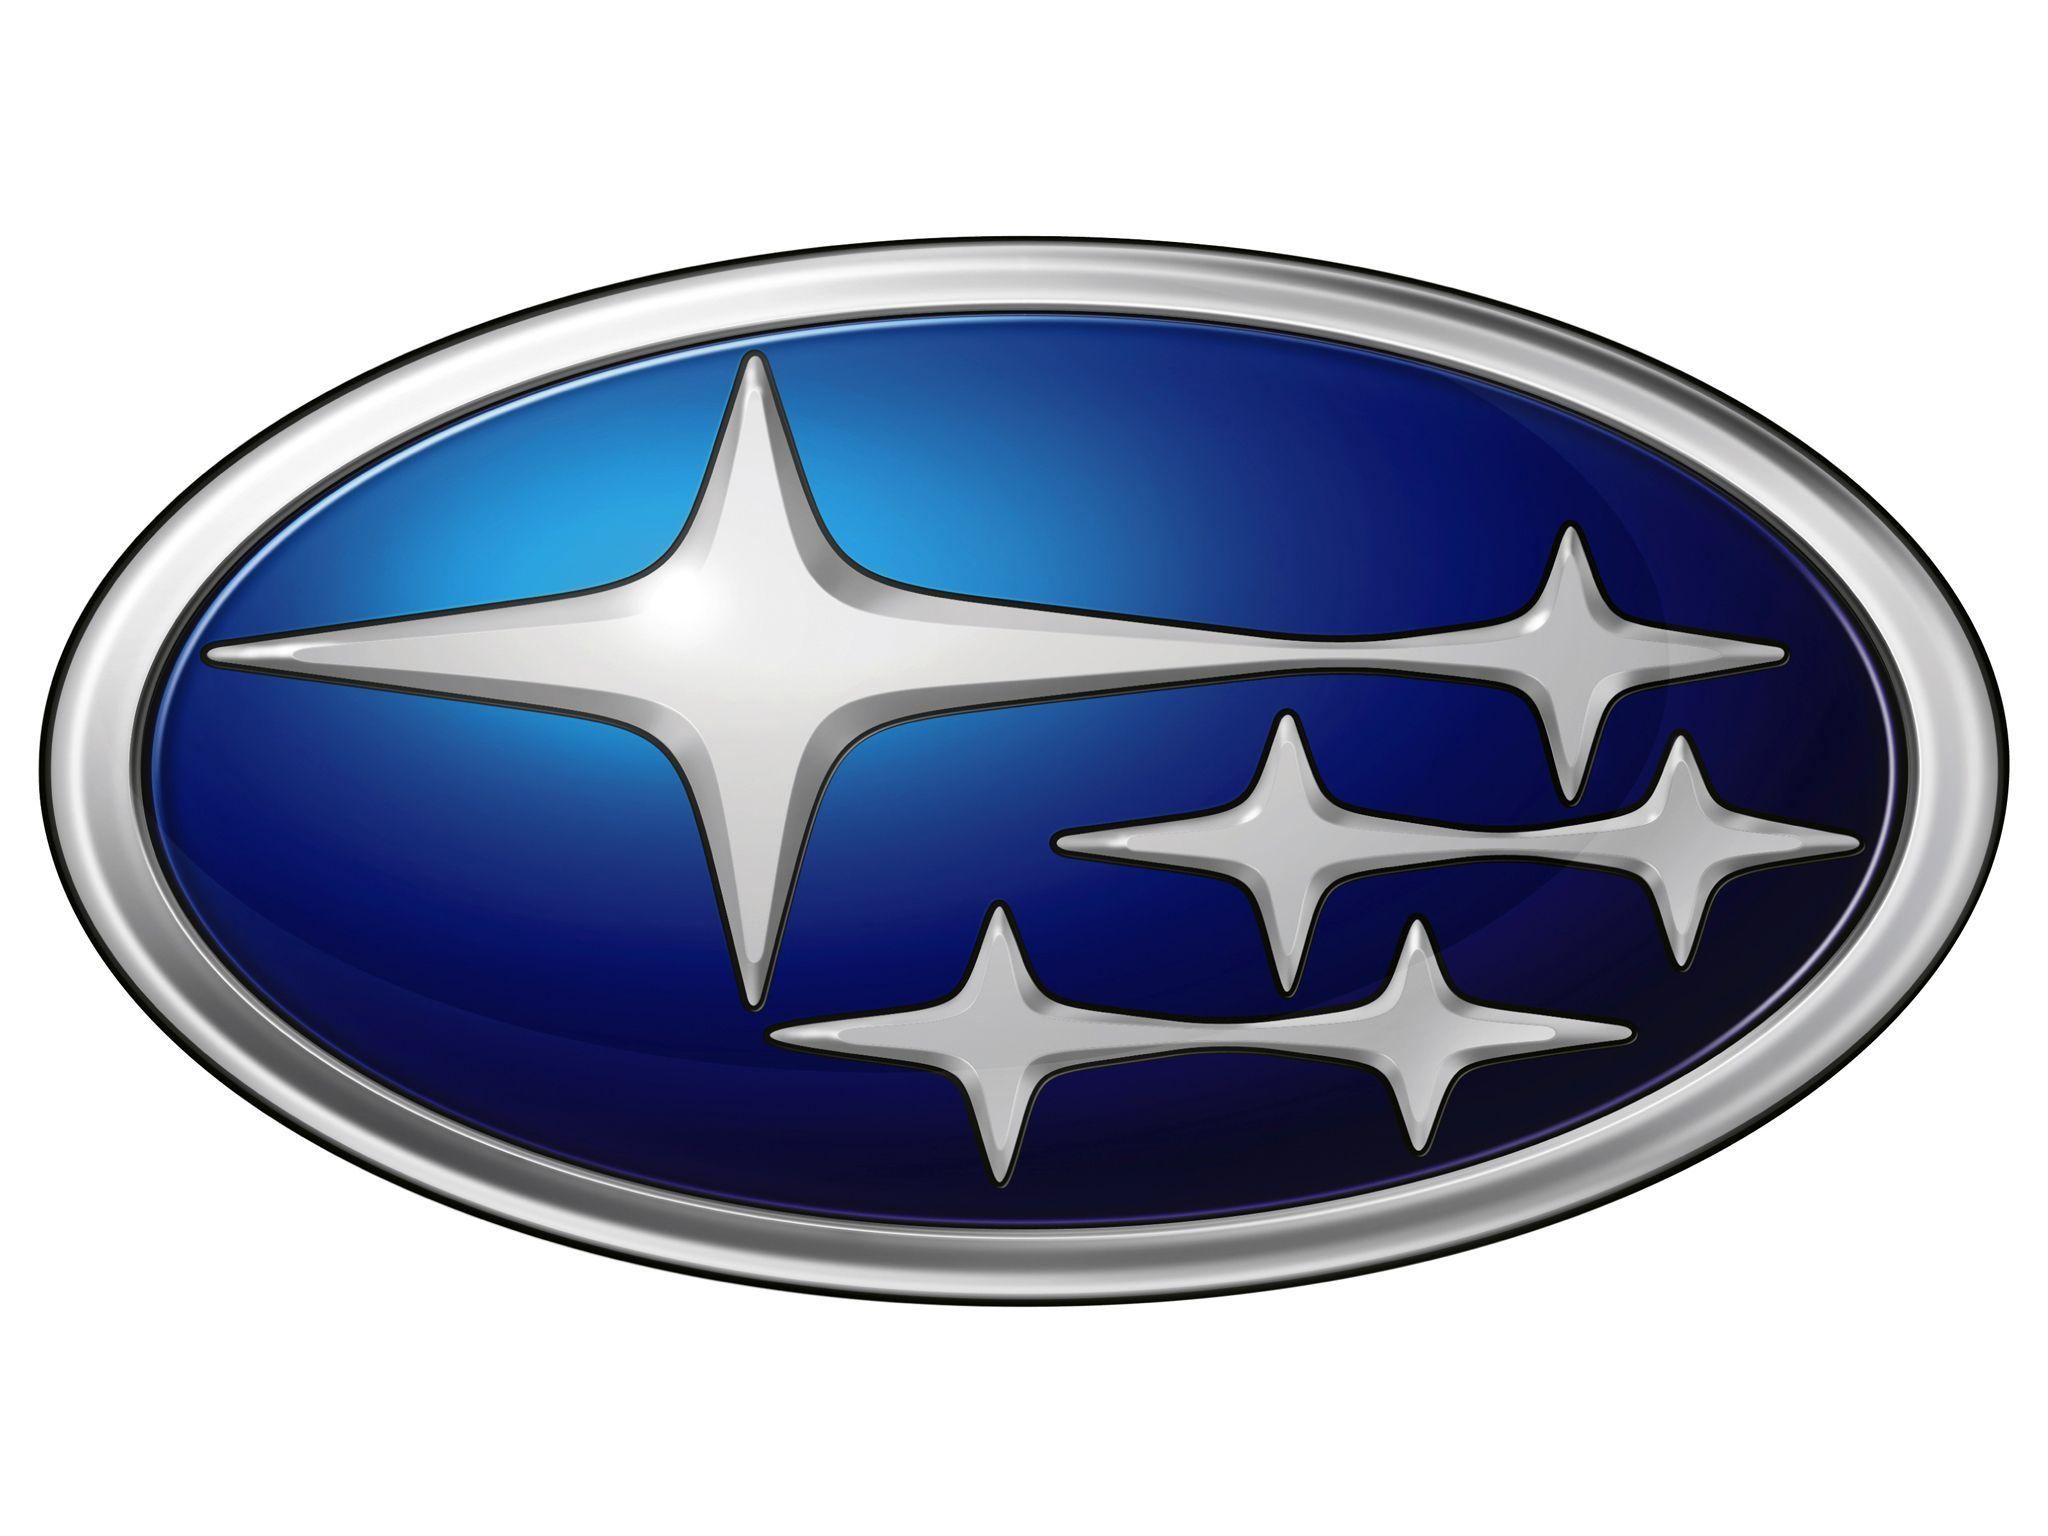 2048x1536 Subaru Logo Wallpapers